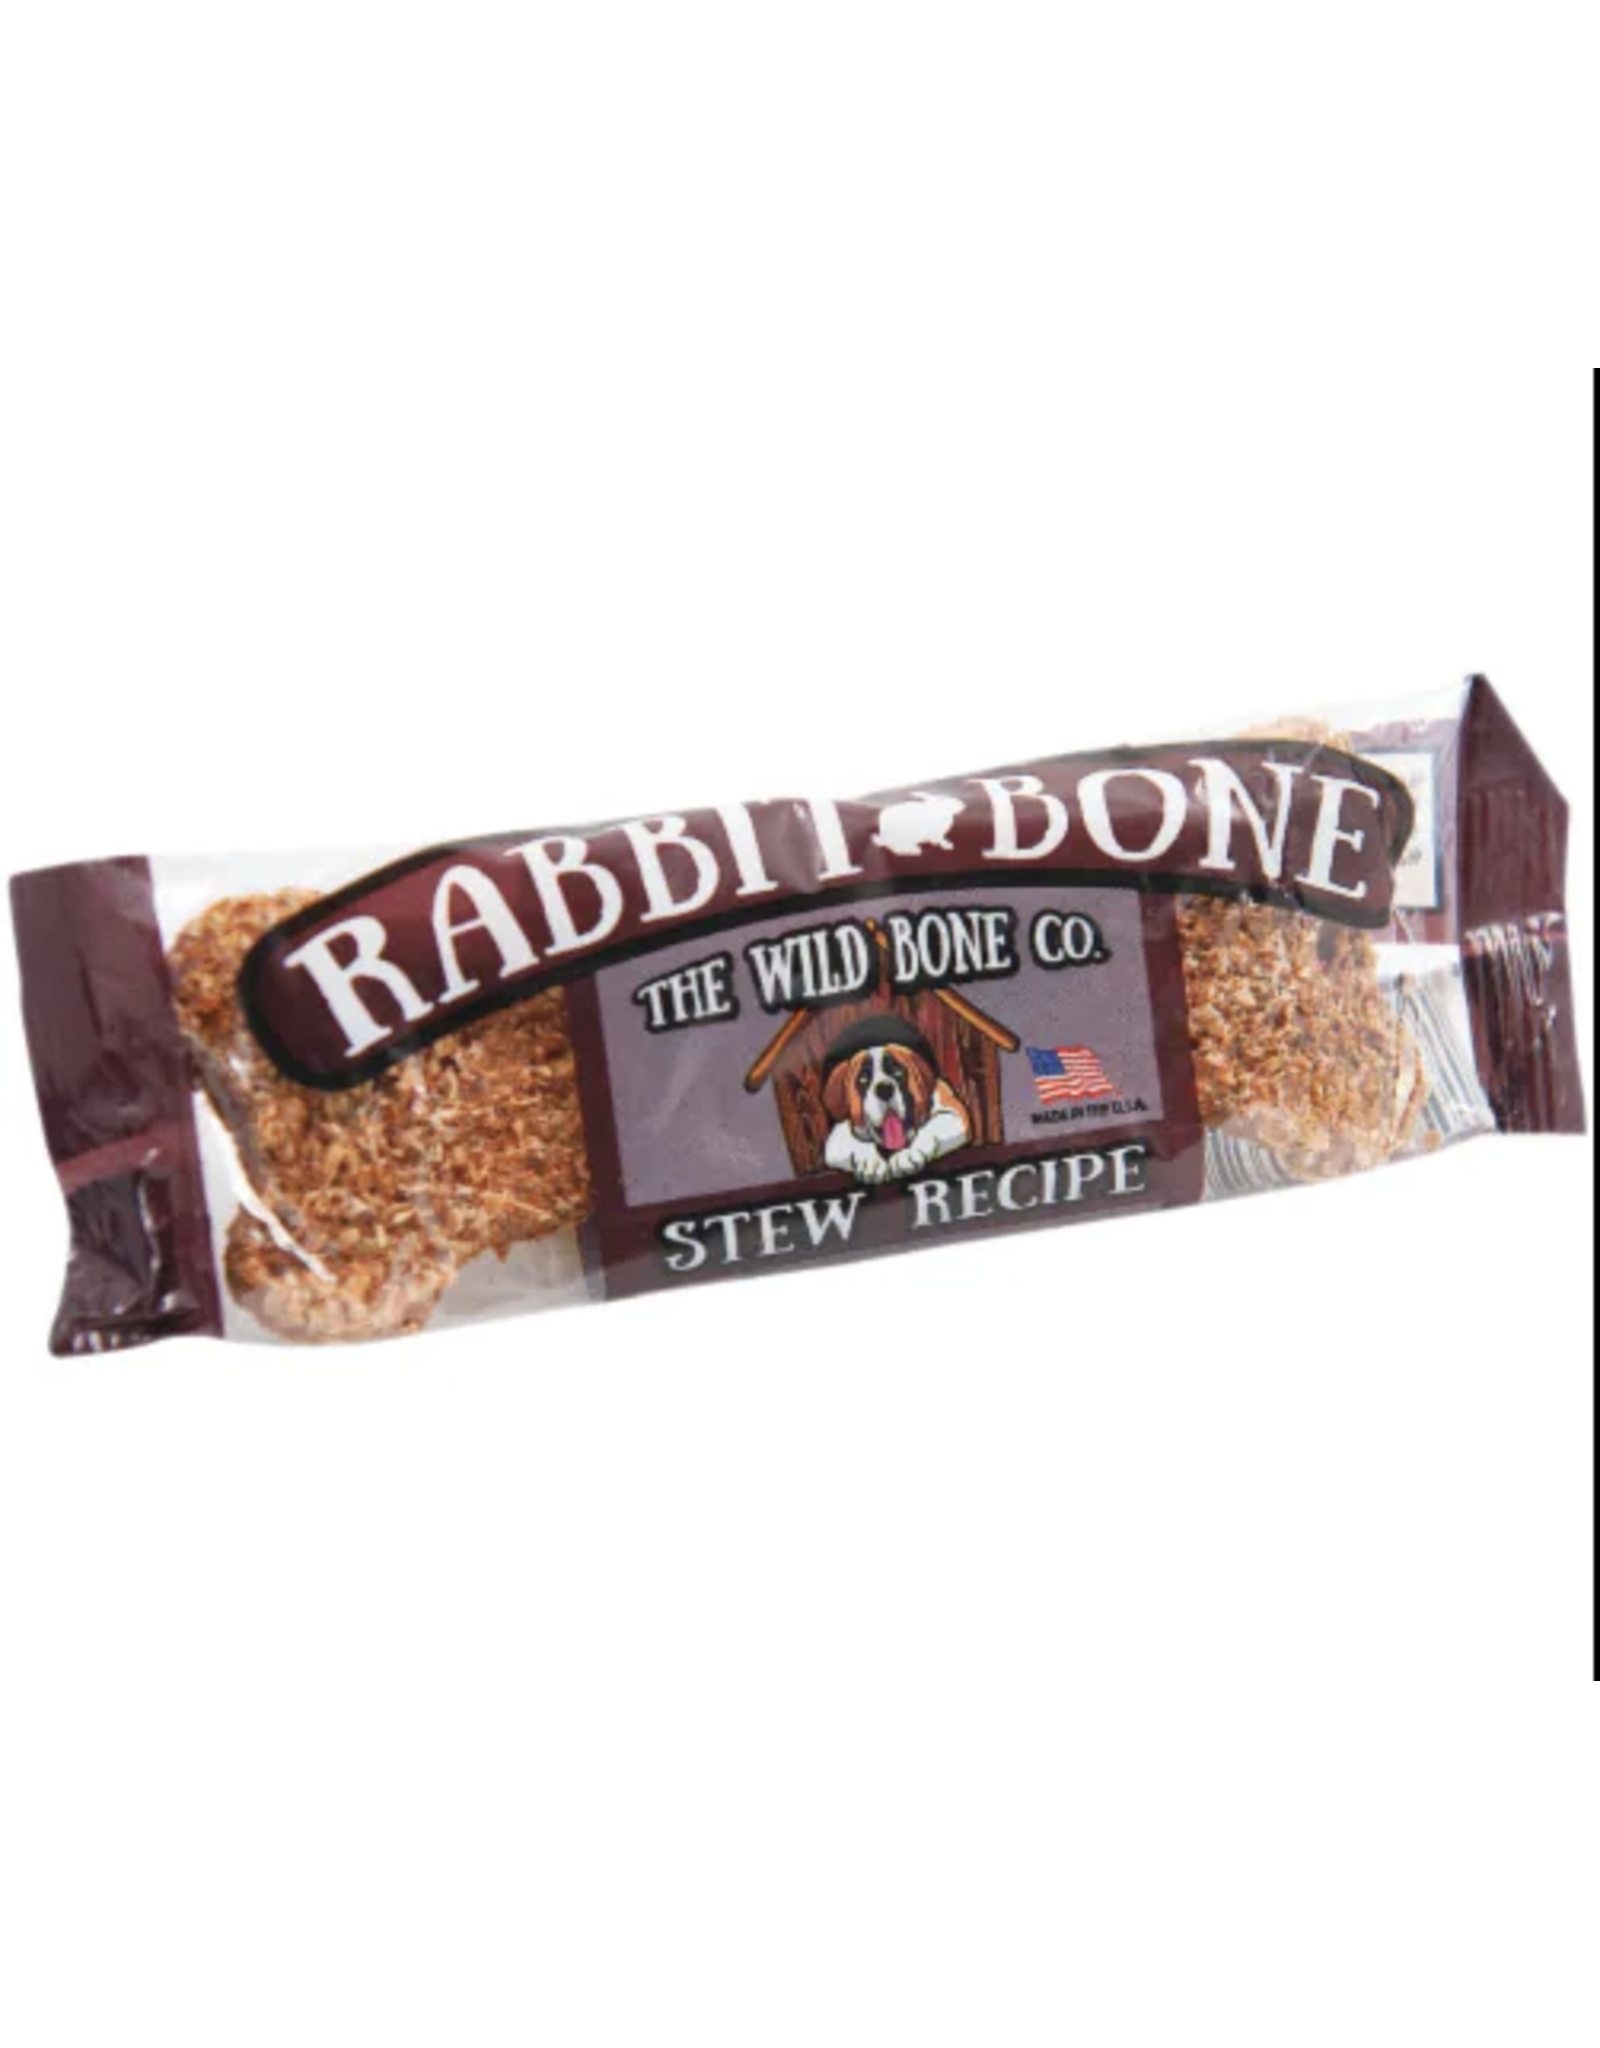 The Wild Bone Co. The Wild Bone Co. Rabbit Bone Stew Recipe 1oz